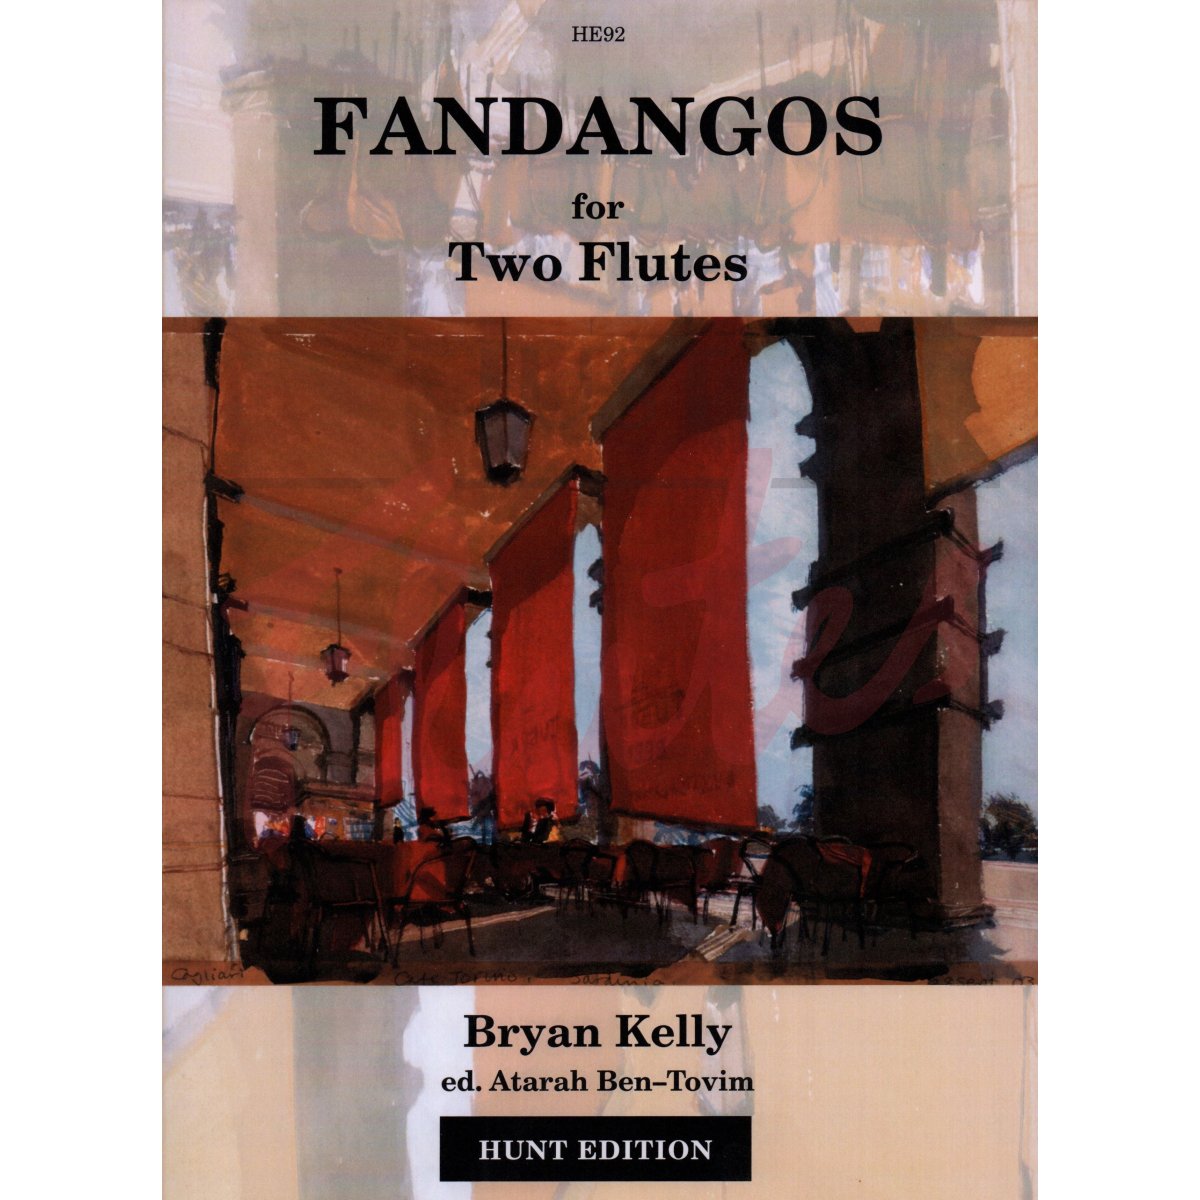 Fandangos for Two Flutes